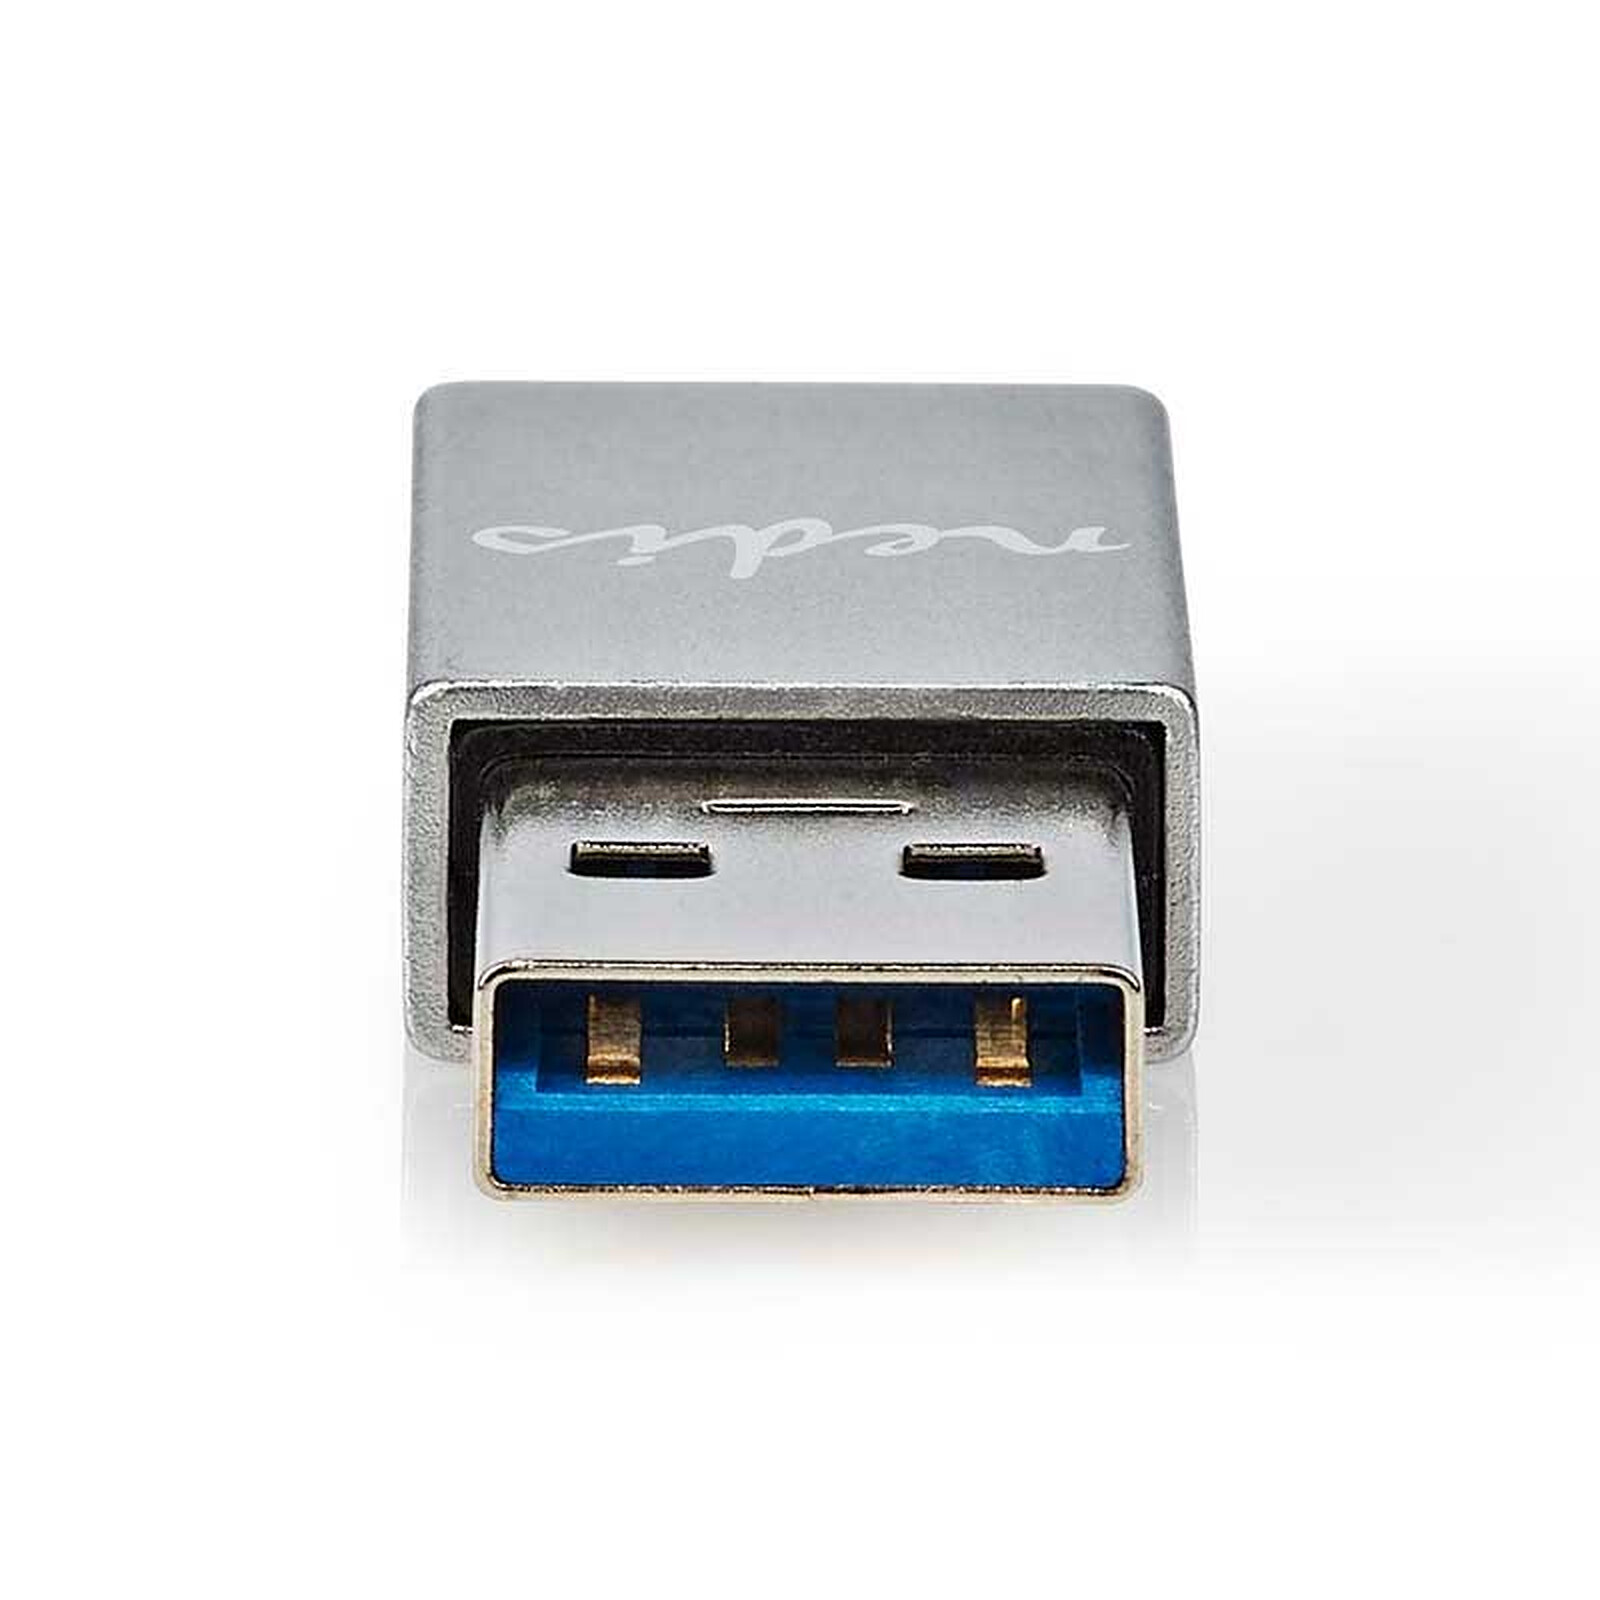 Crucial Adaptateur USB-C/A - USB - Garantie 3 ans LDLC